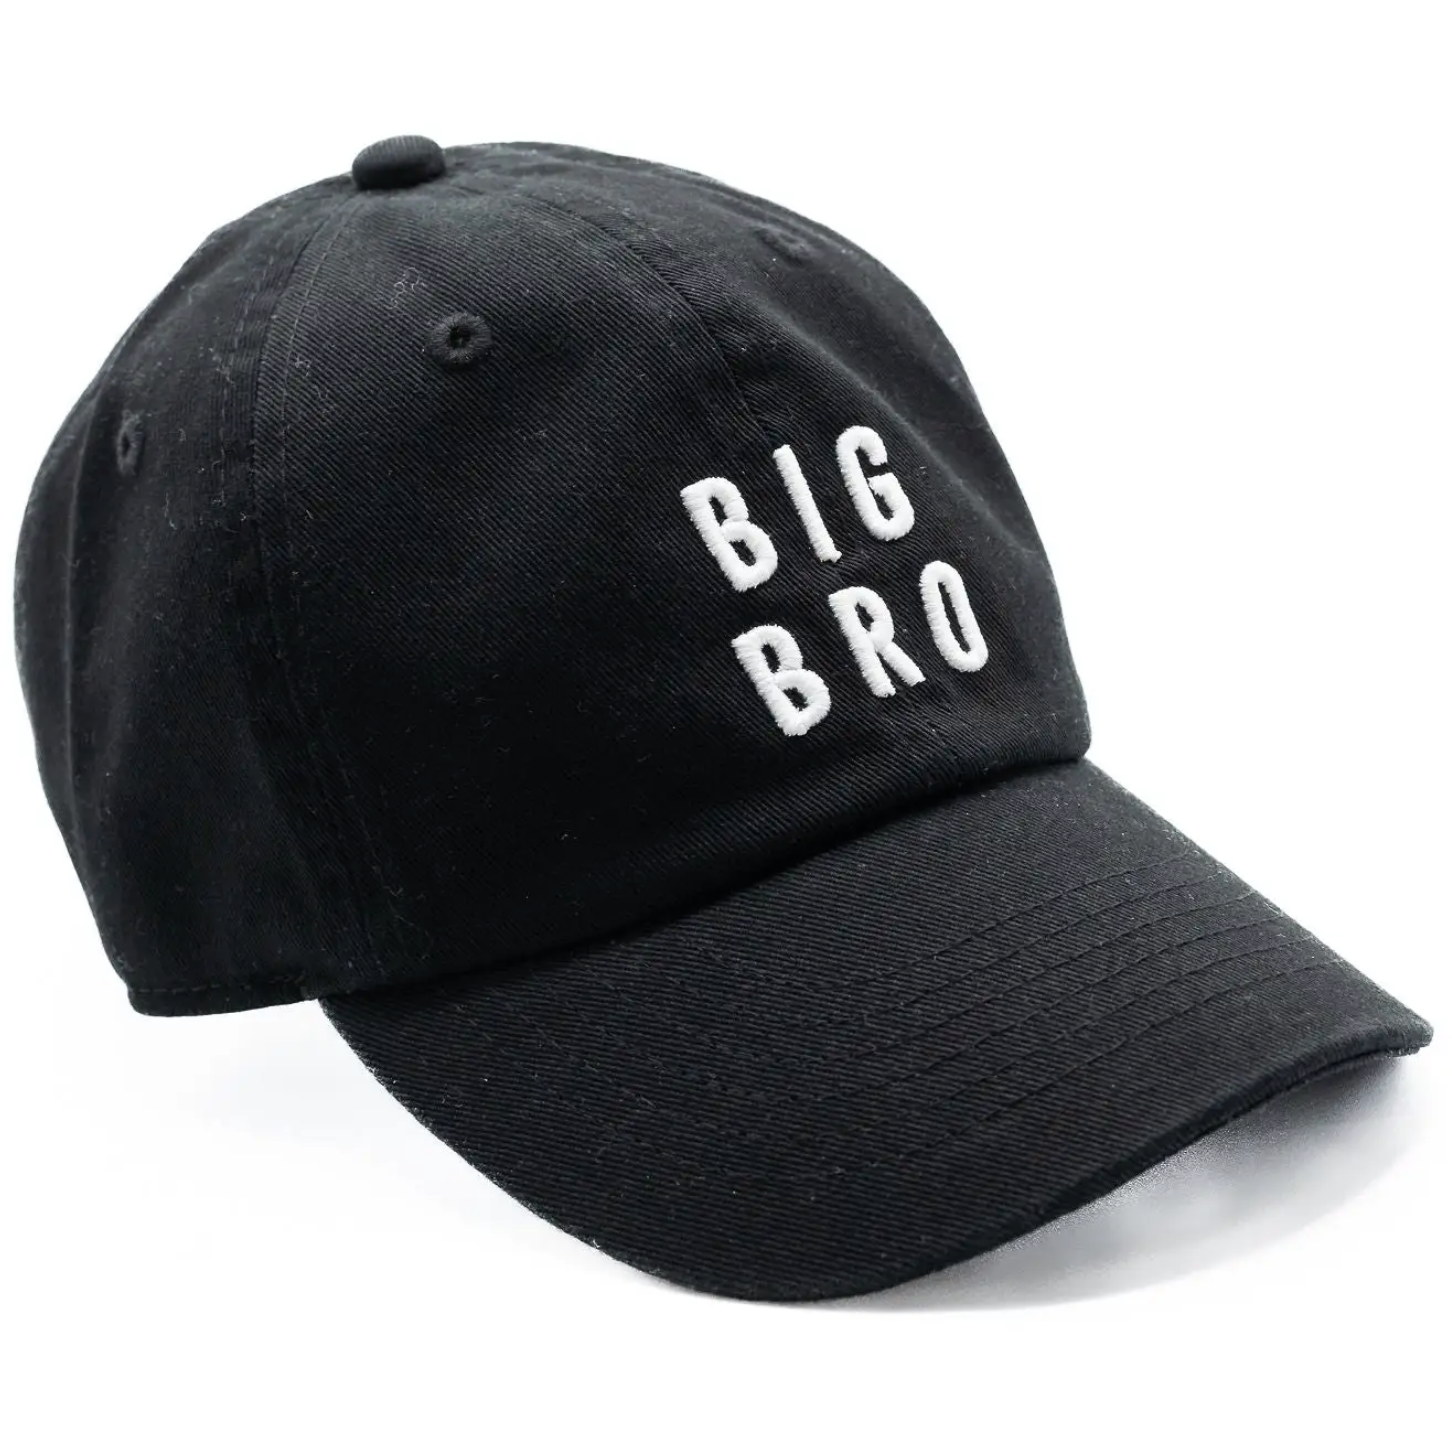 big bro hat in black